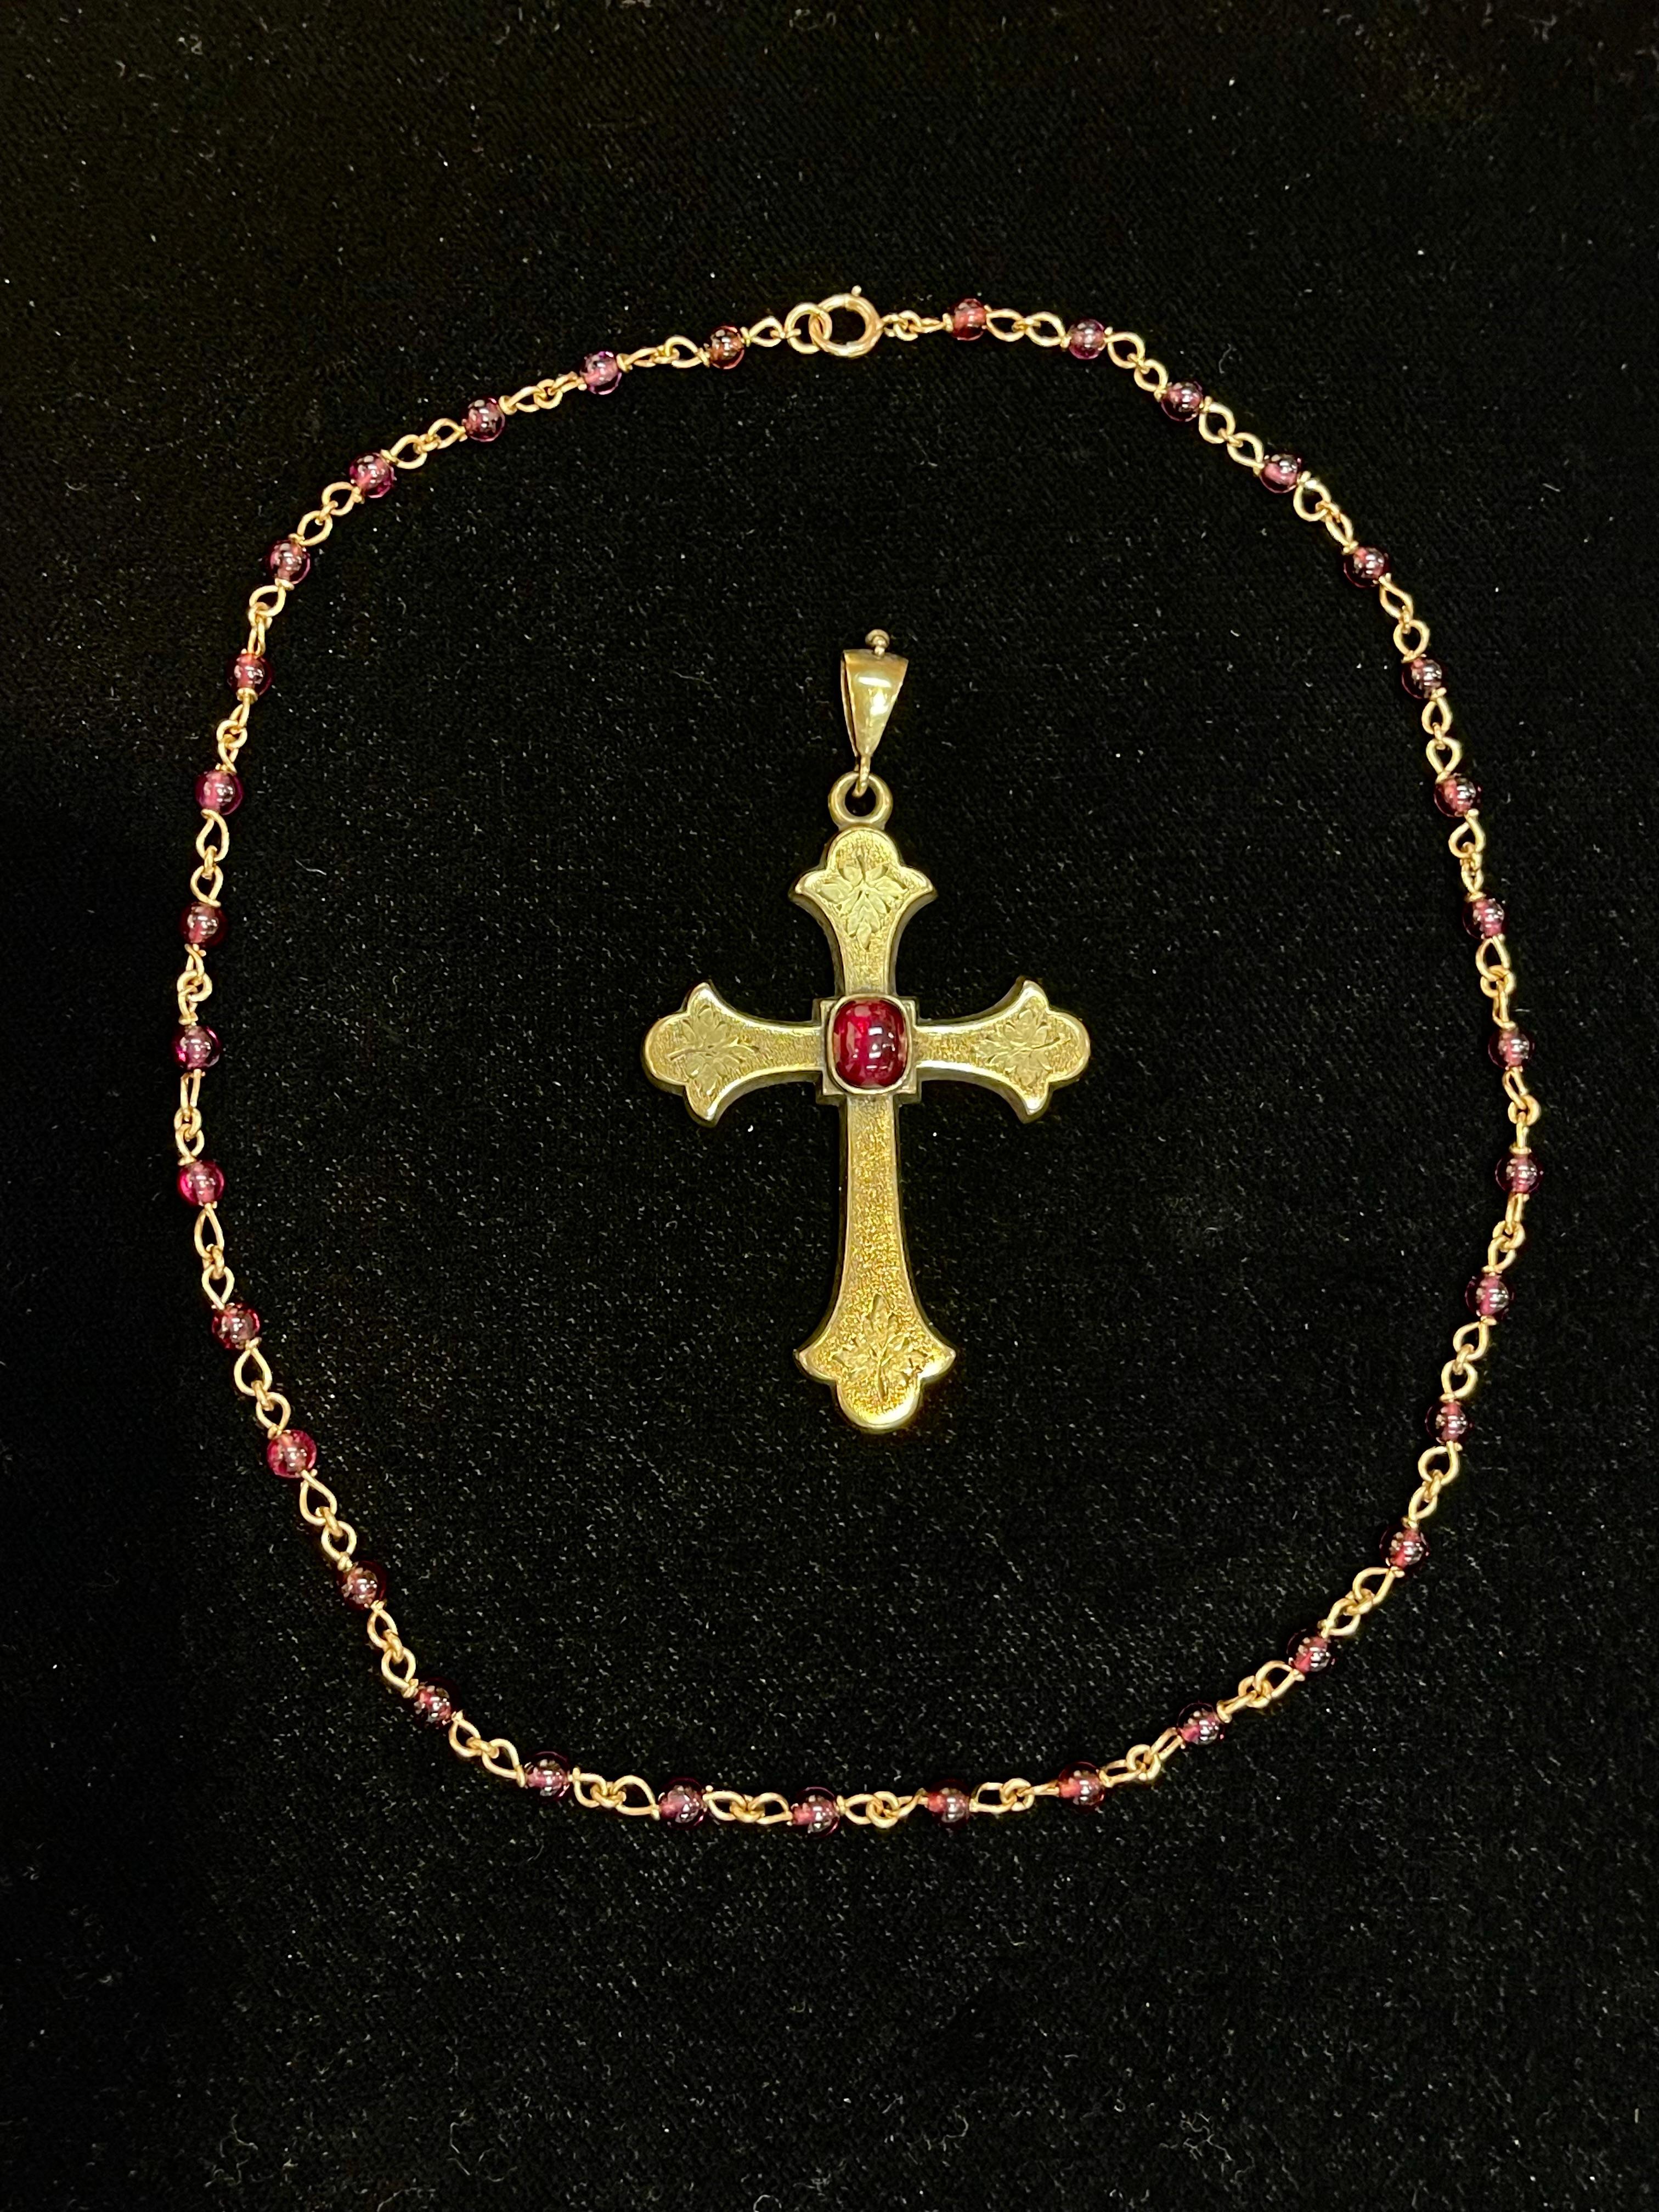 Edwardian Antique Gold and Garnet Vintage Statement Cross Pendant and Necklace For Sale